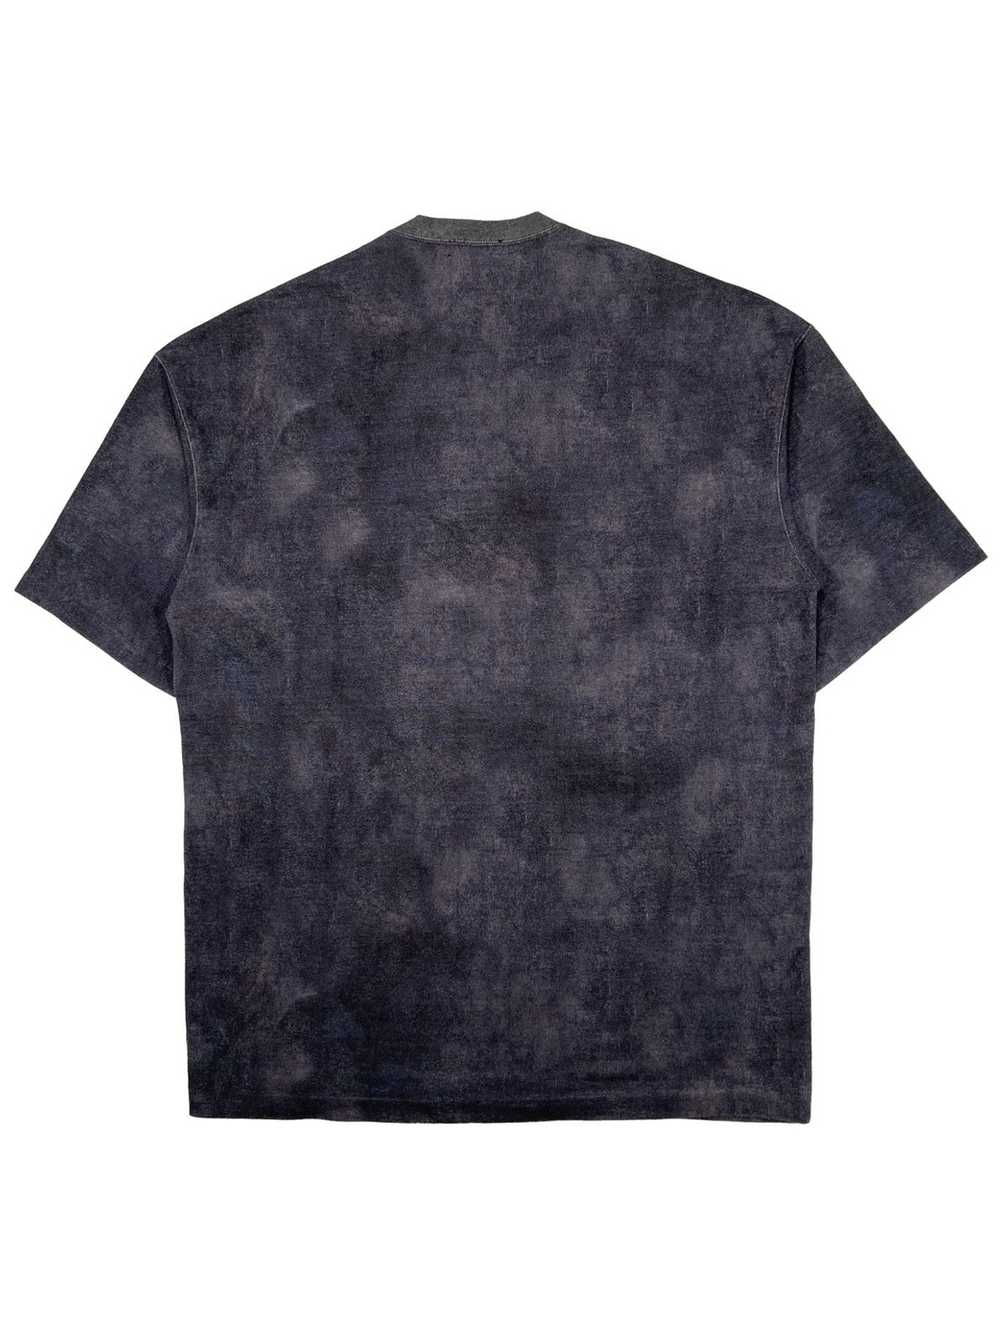 Undercover AW15 William Blake T-Shirt - image 2